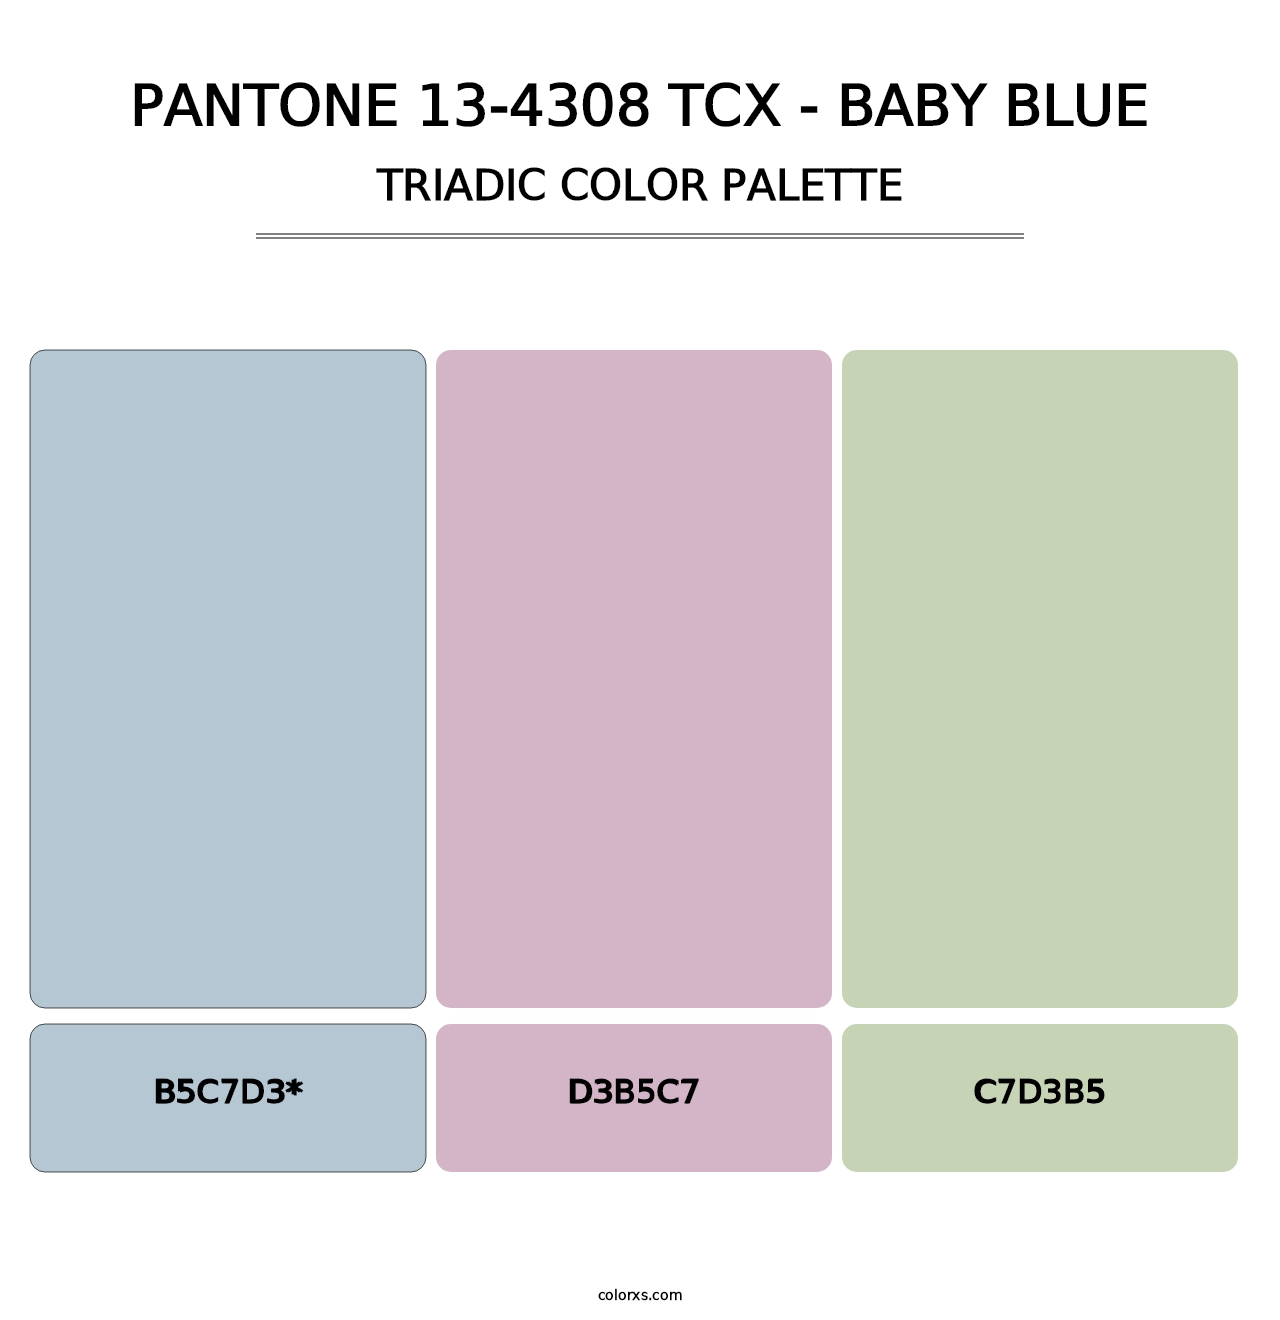 PANTONE 13-4308 TCX - Baby Blue - Triadic Color Palette